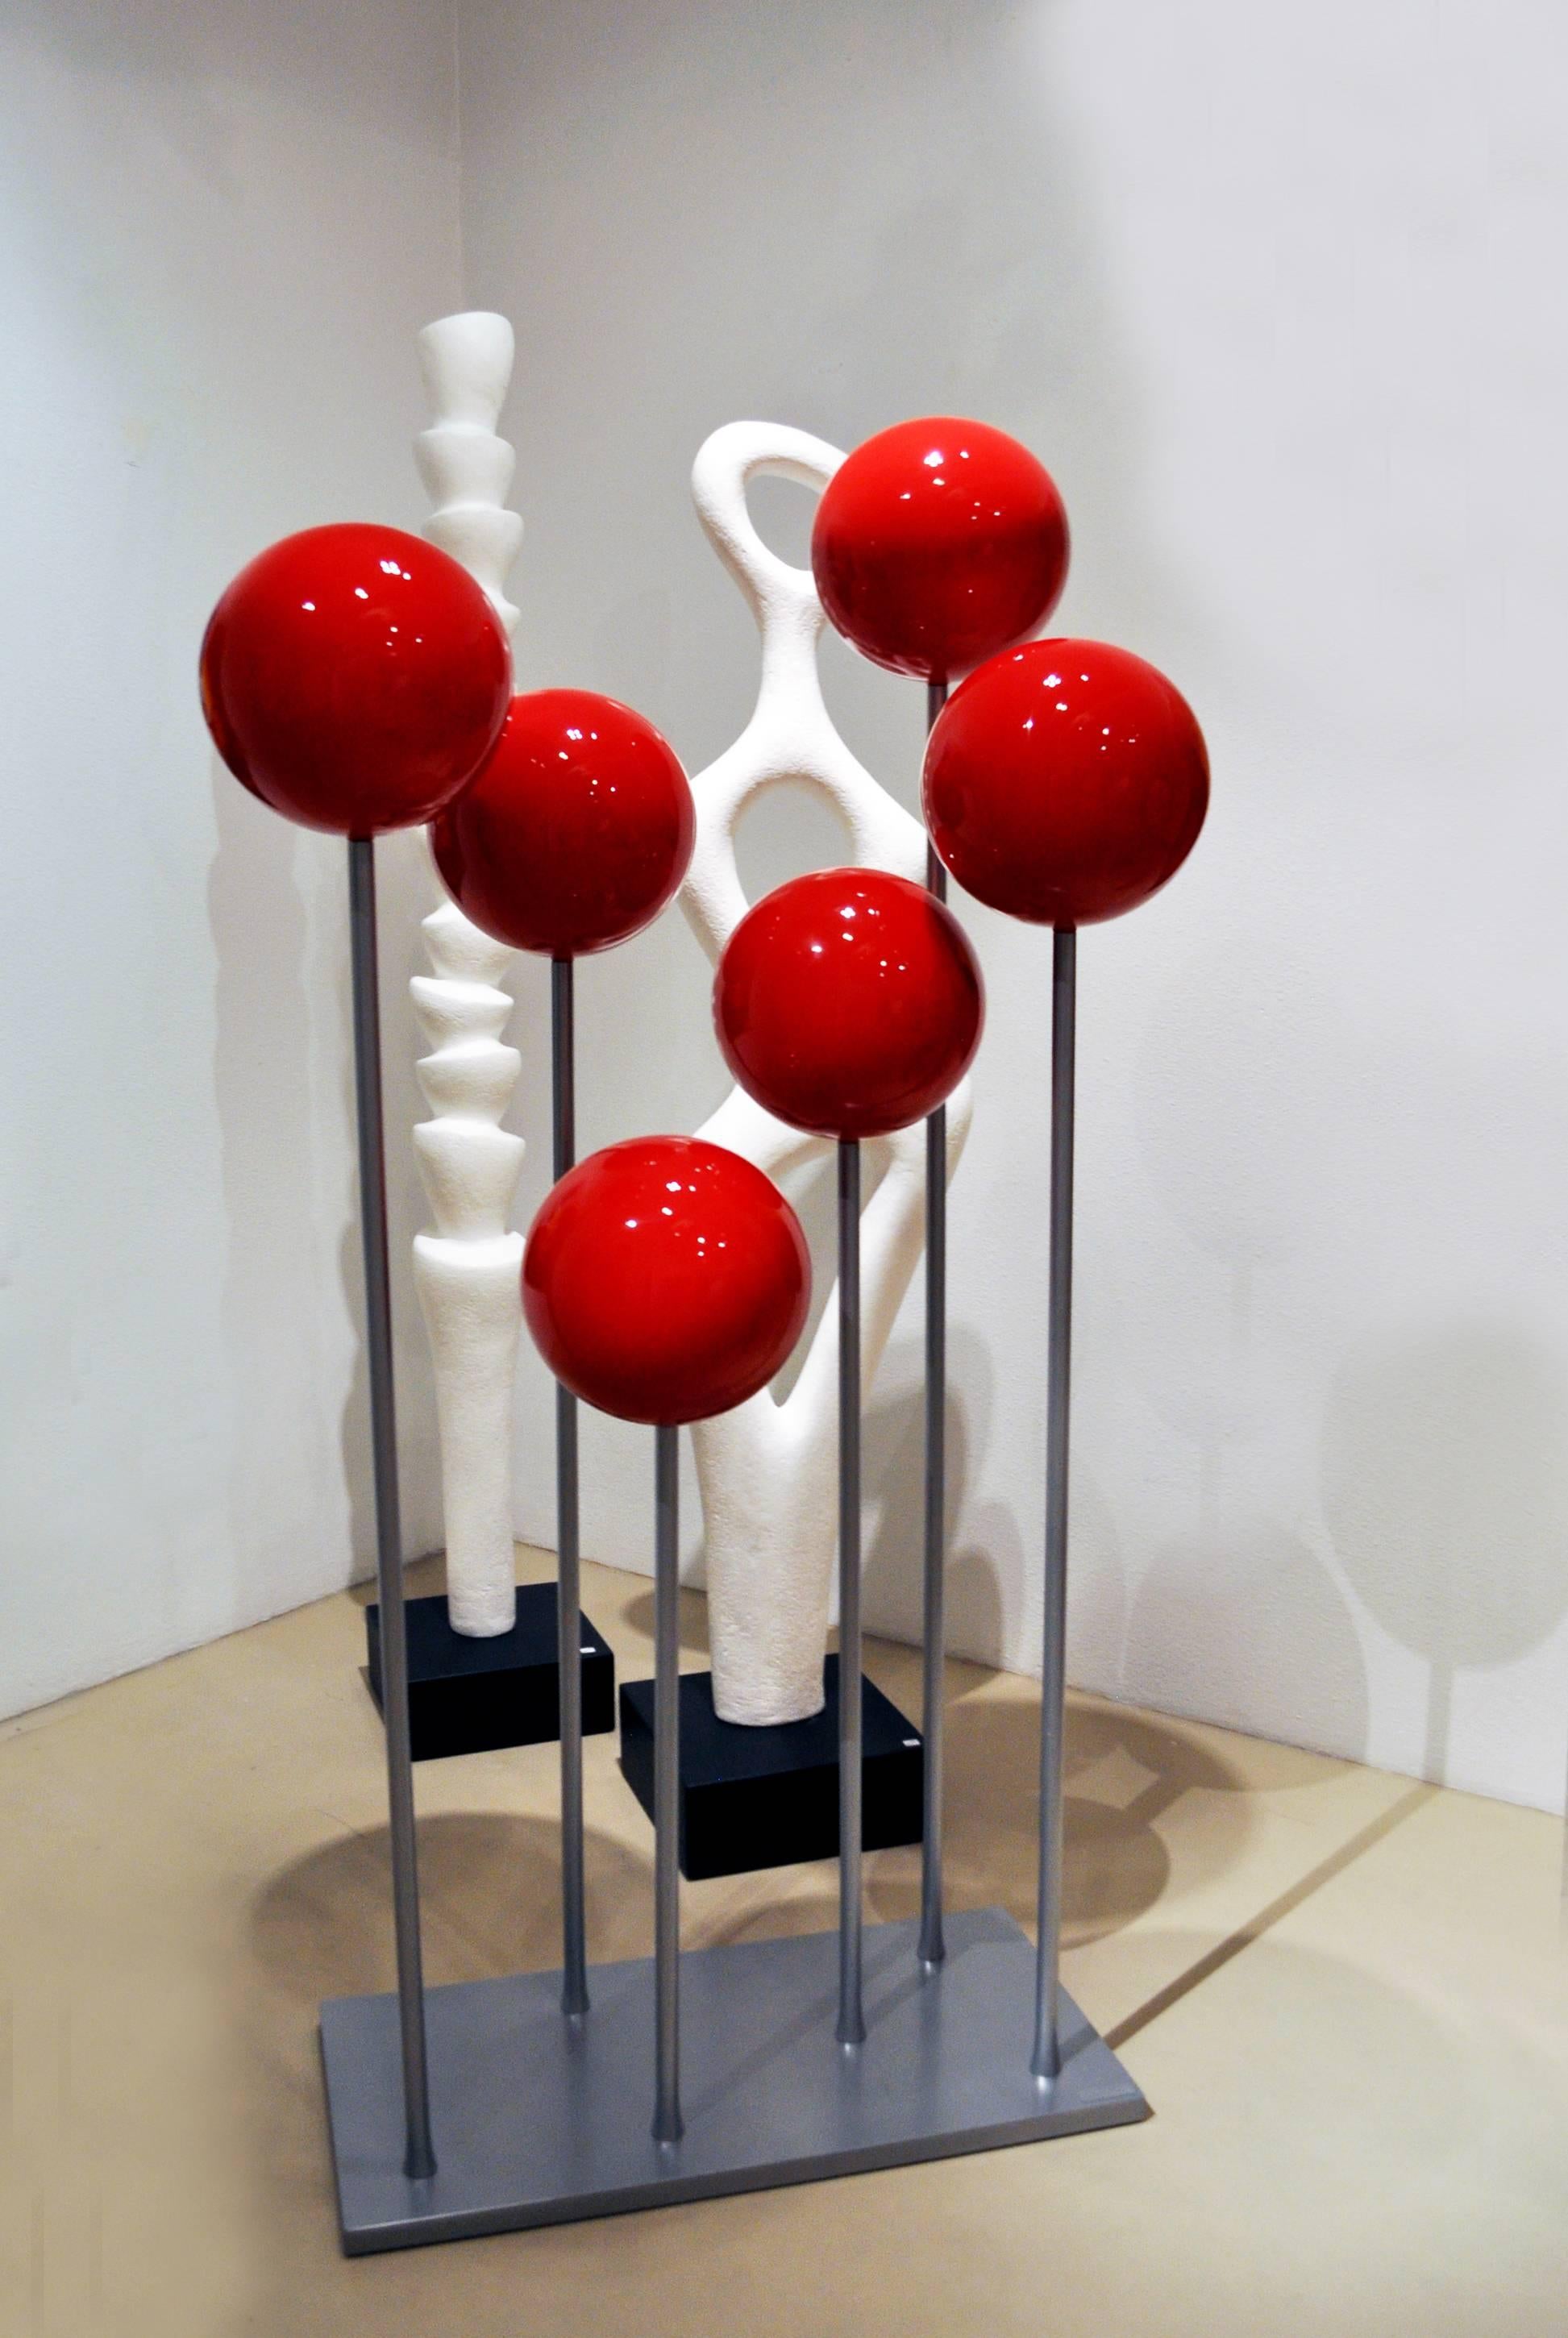 American Red Steel Ball and Aluminum Sculpture by Artist Robert Marion